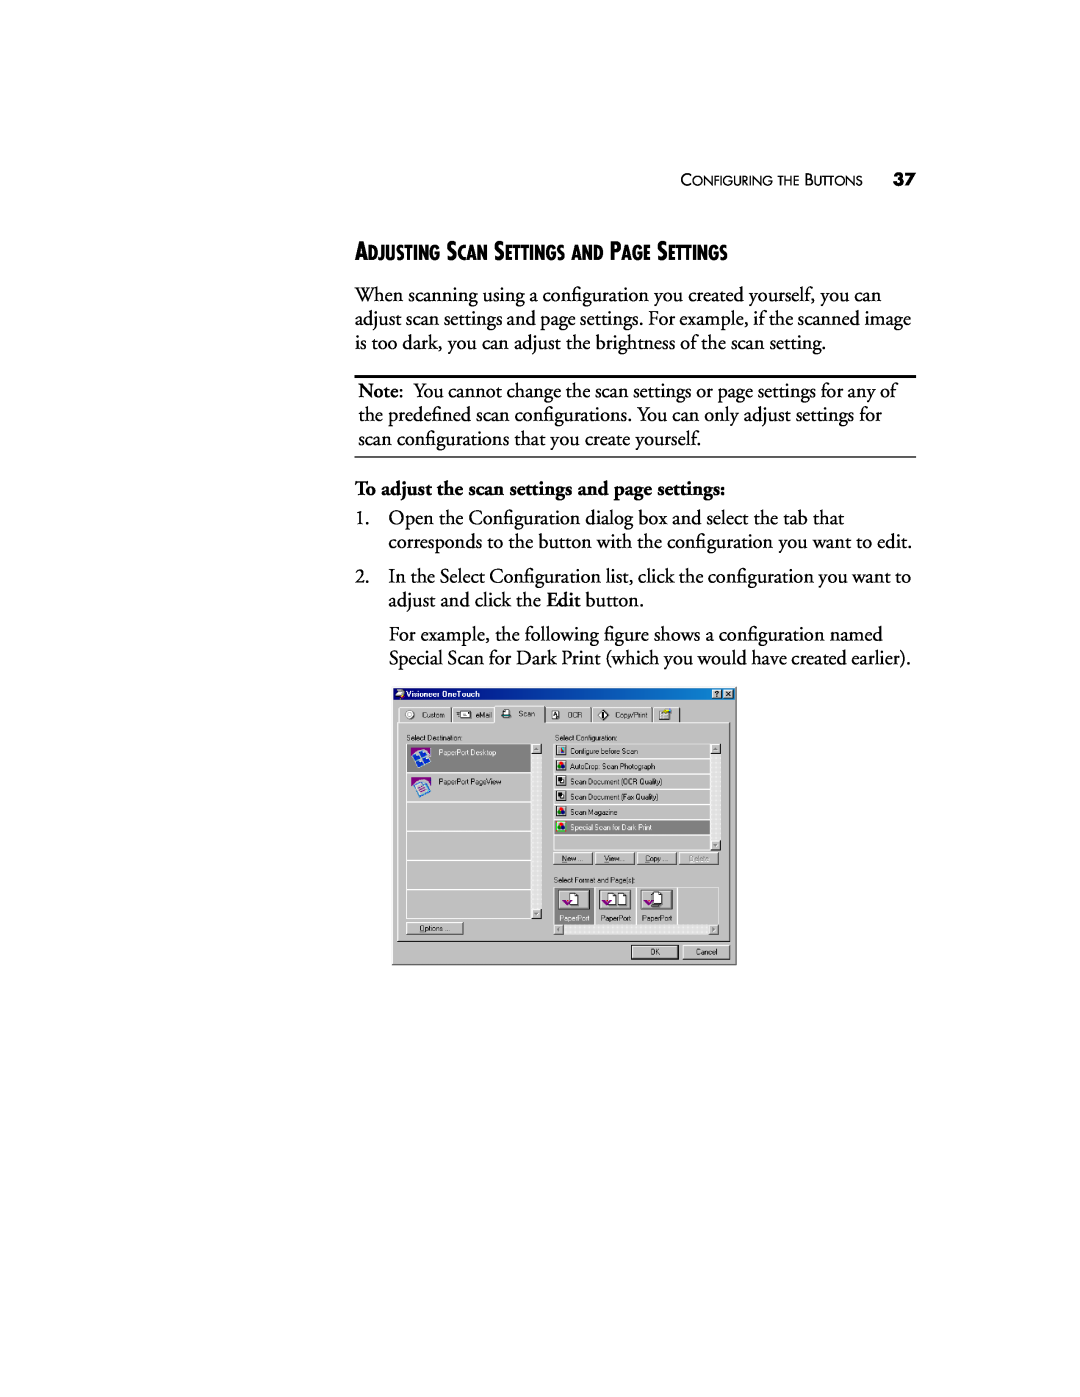 Visioneer 9320 manual Adjusting Scan Settings And Page Settings, To adjust the scan settings and page settings 